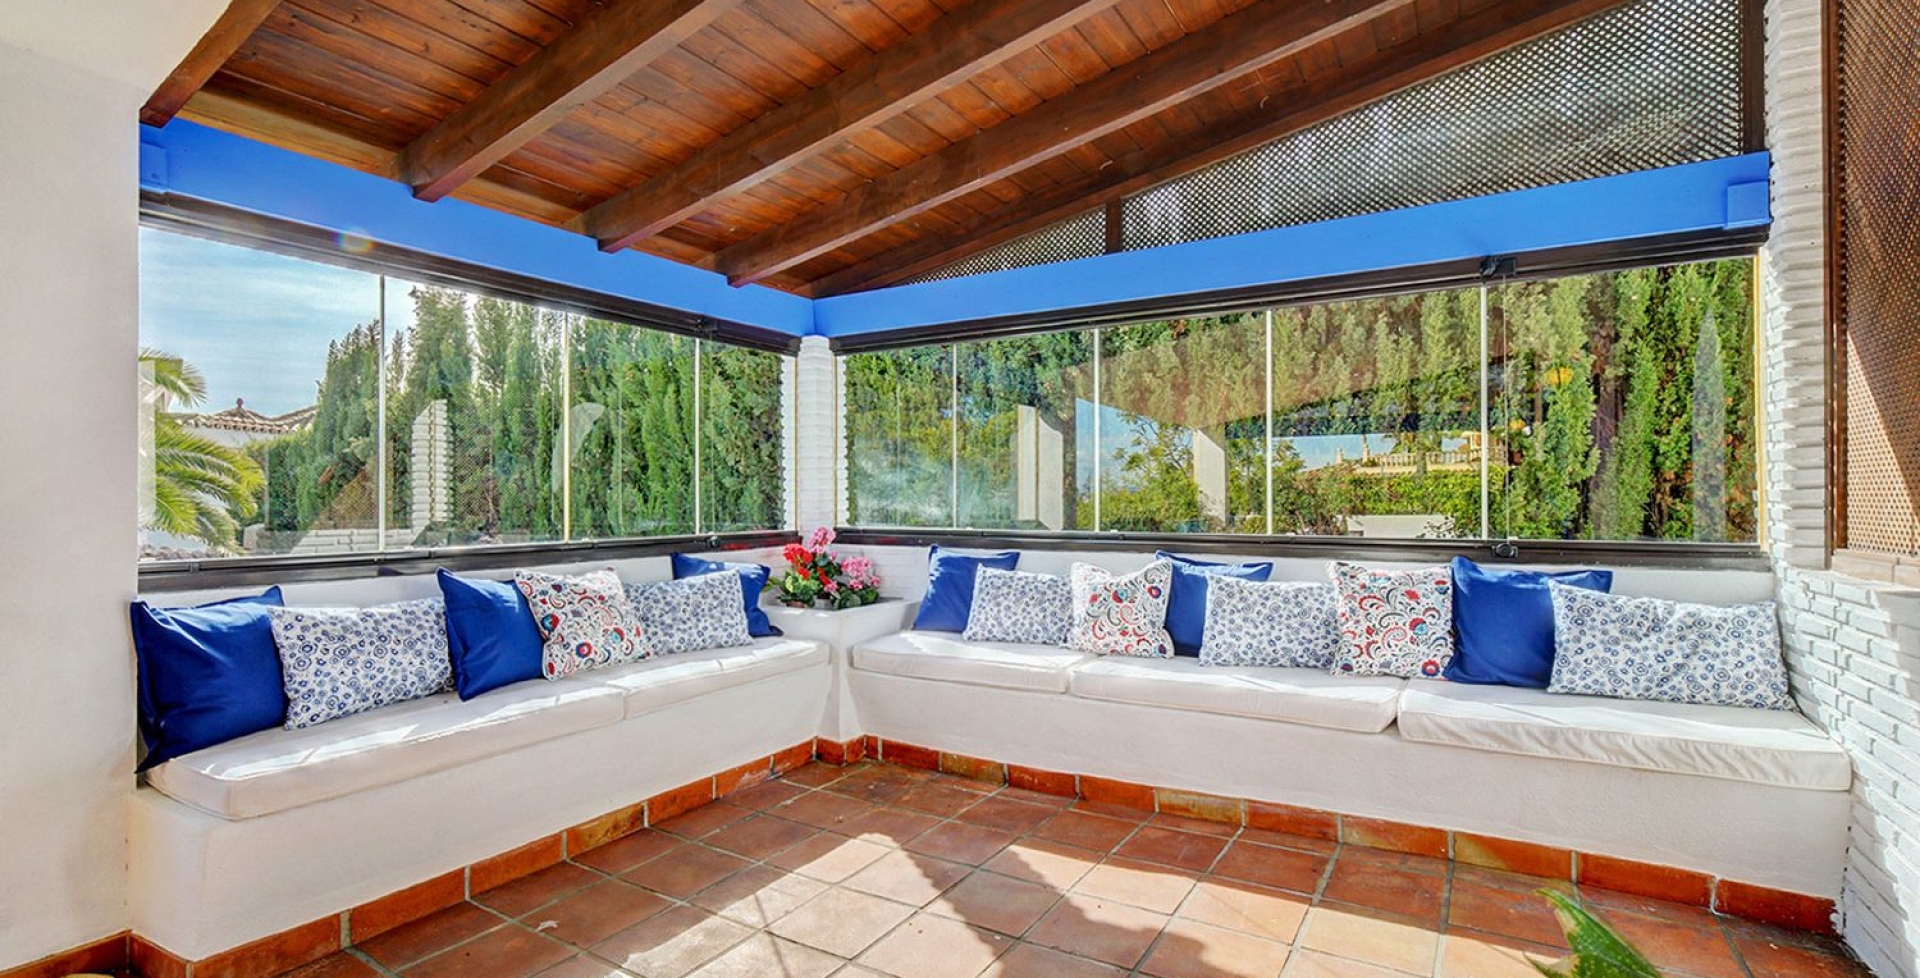 Villa-Banus-outdoor seating on the terrace